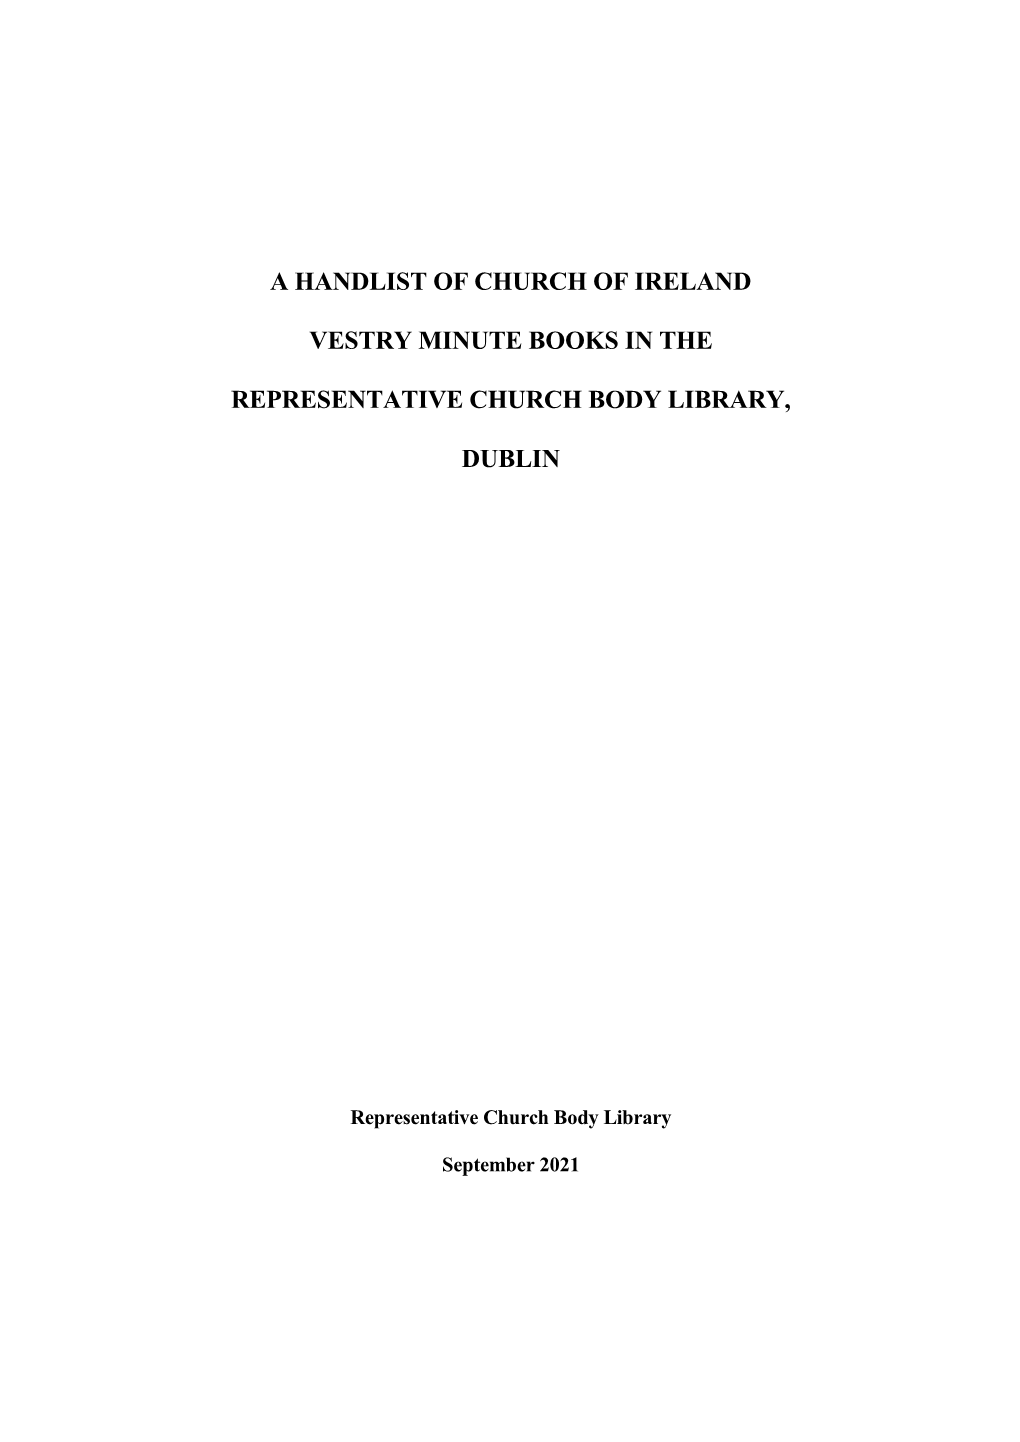 A Handlist of Church of Ireland Vestry Minute